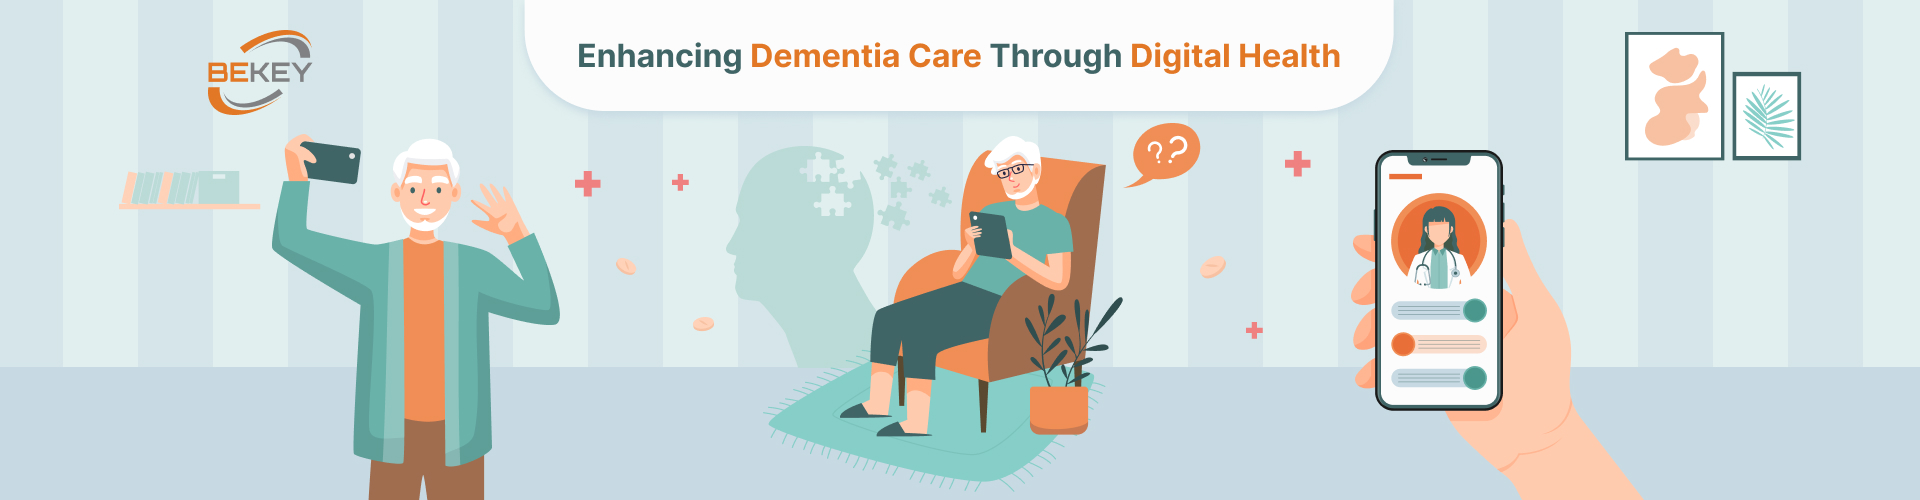 Enhancing Dementia Care Through Digital Health - image